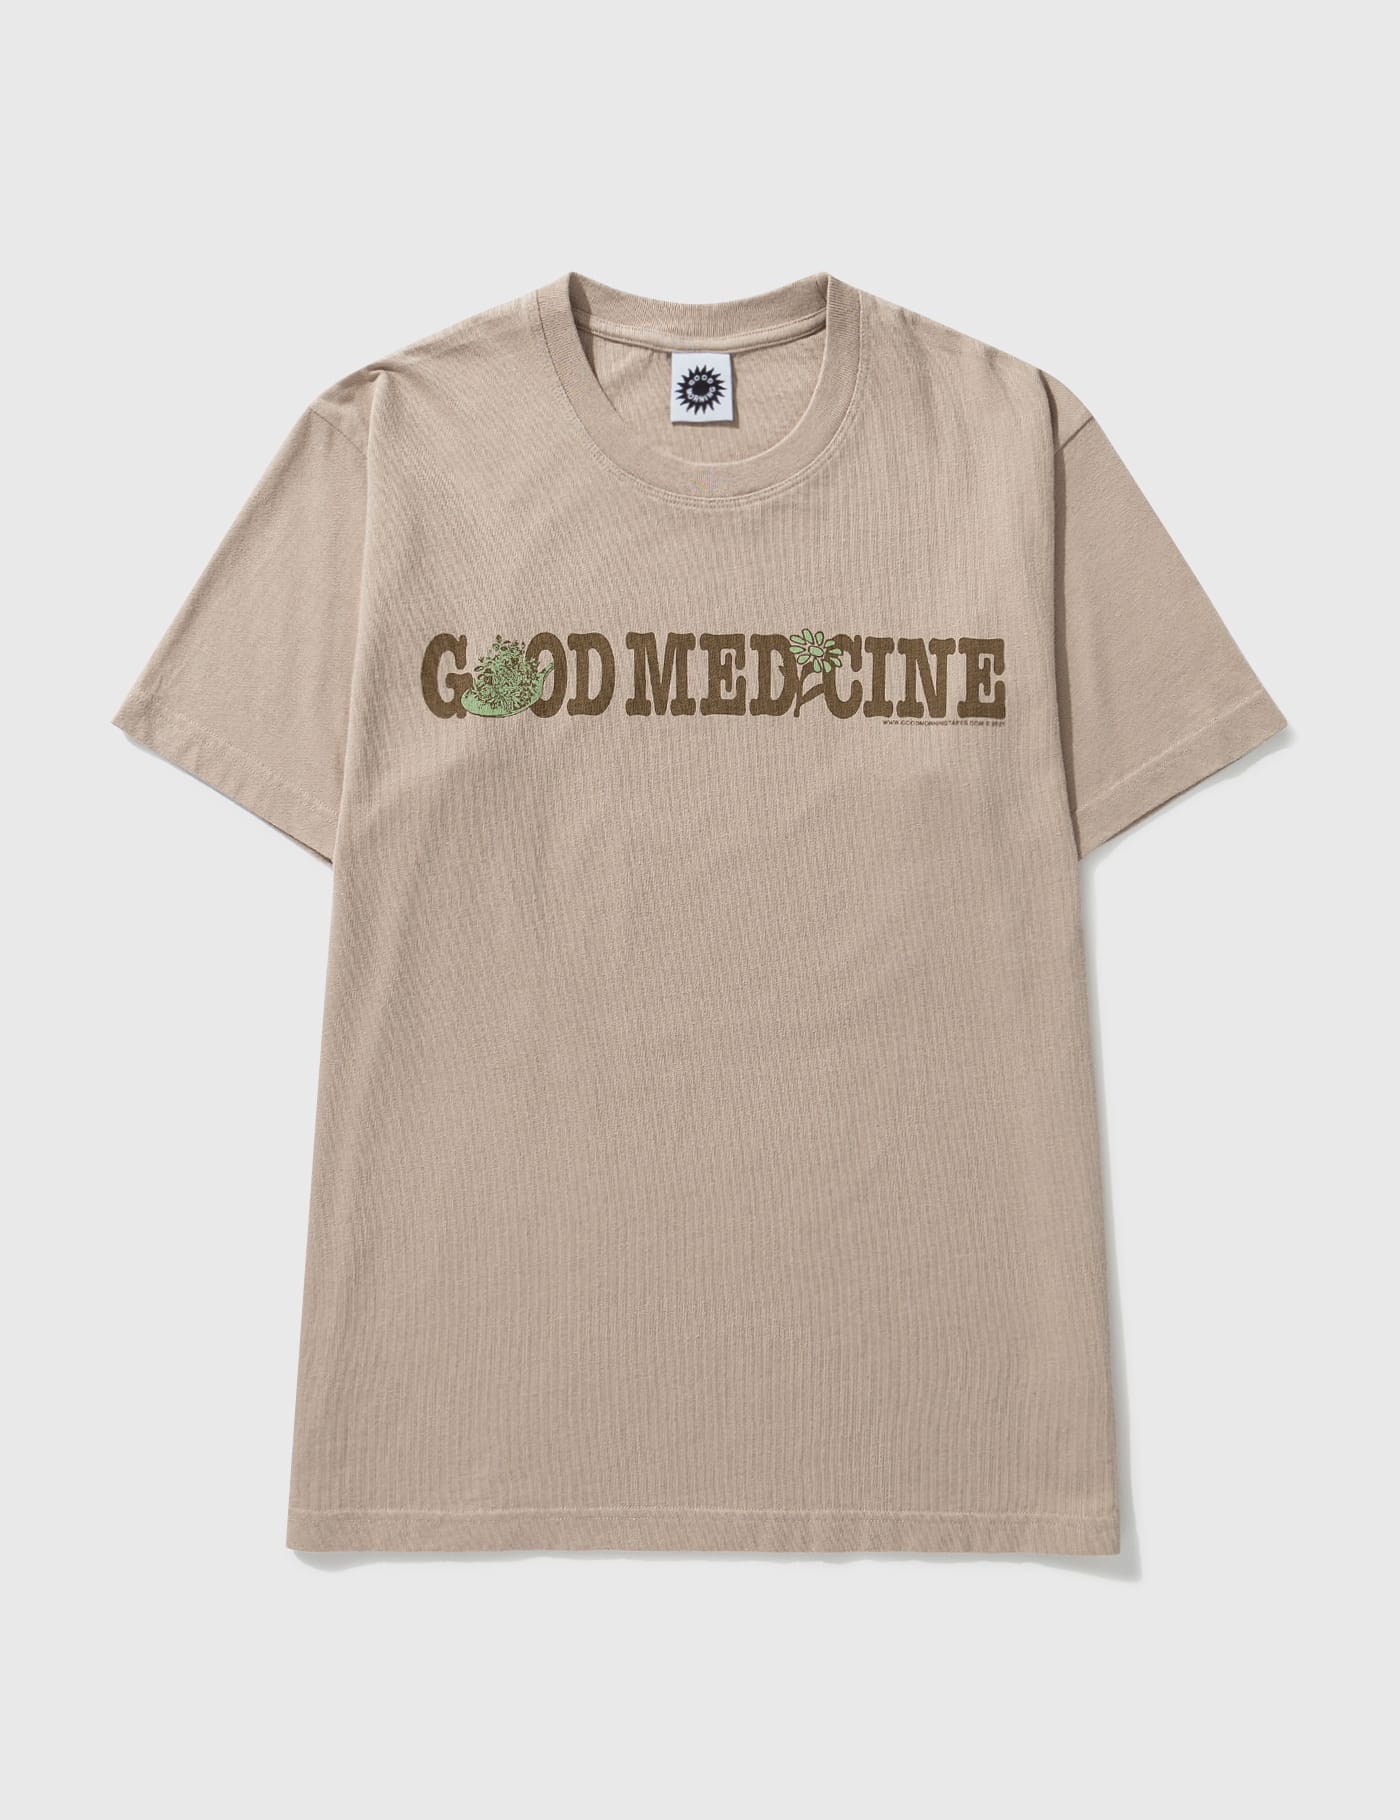 Good Morning Tapes Good Medicine T-shirt